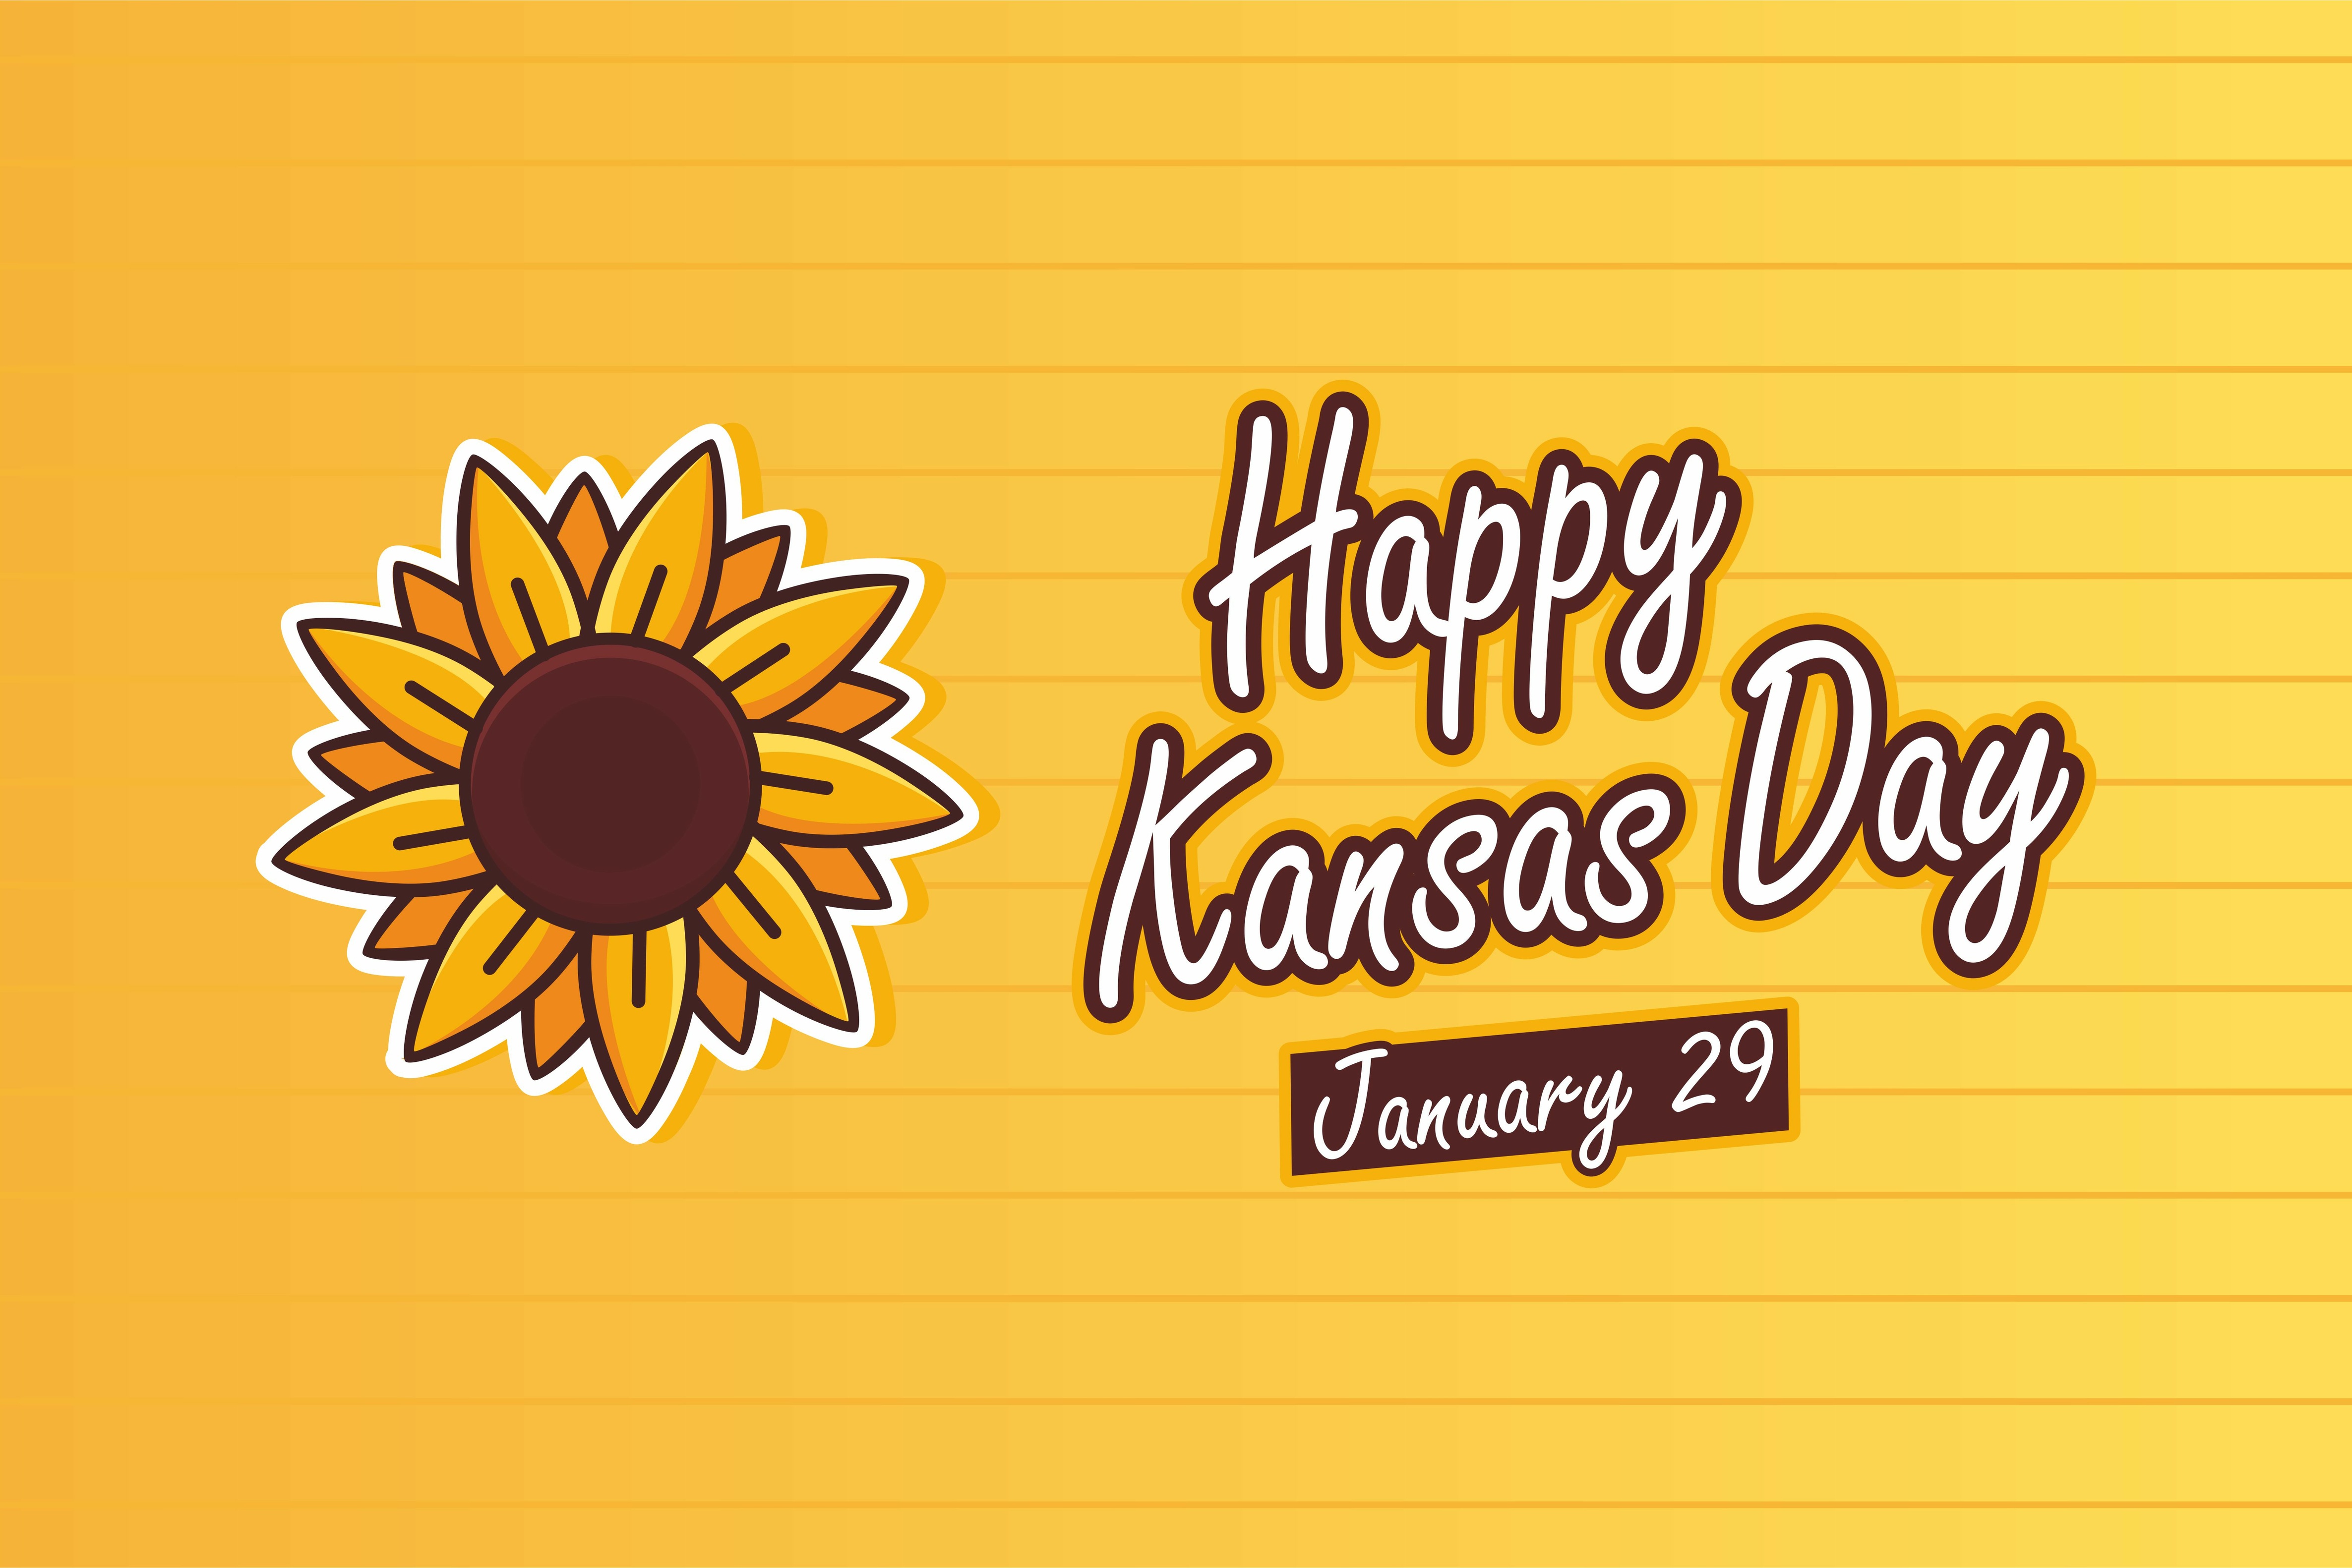 Happy Kansas Day